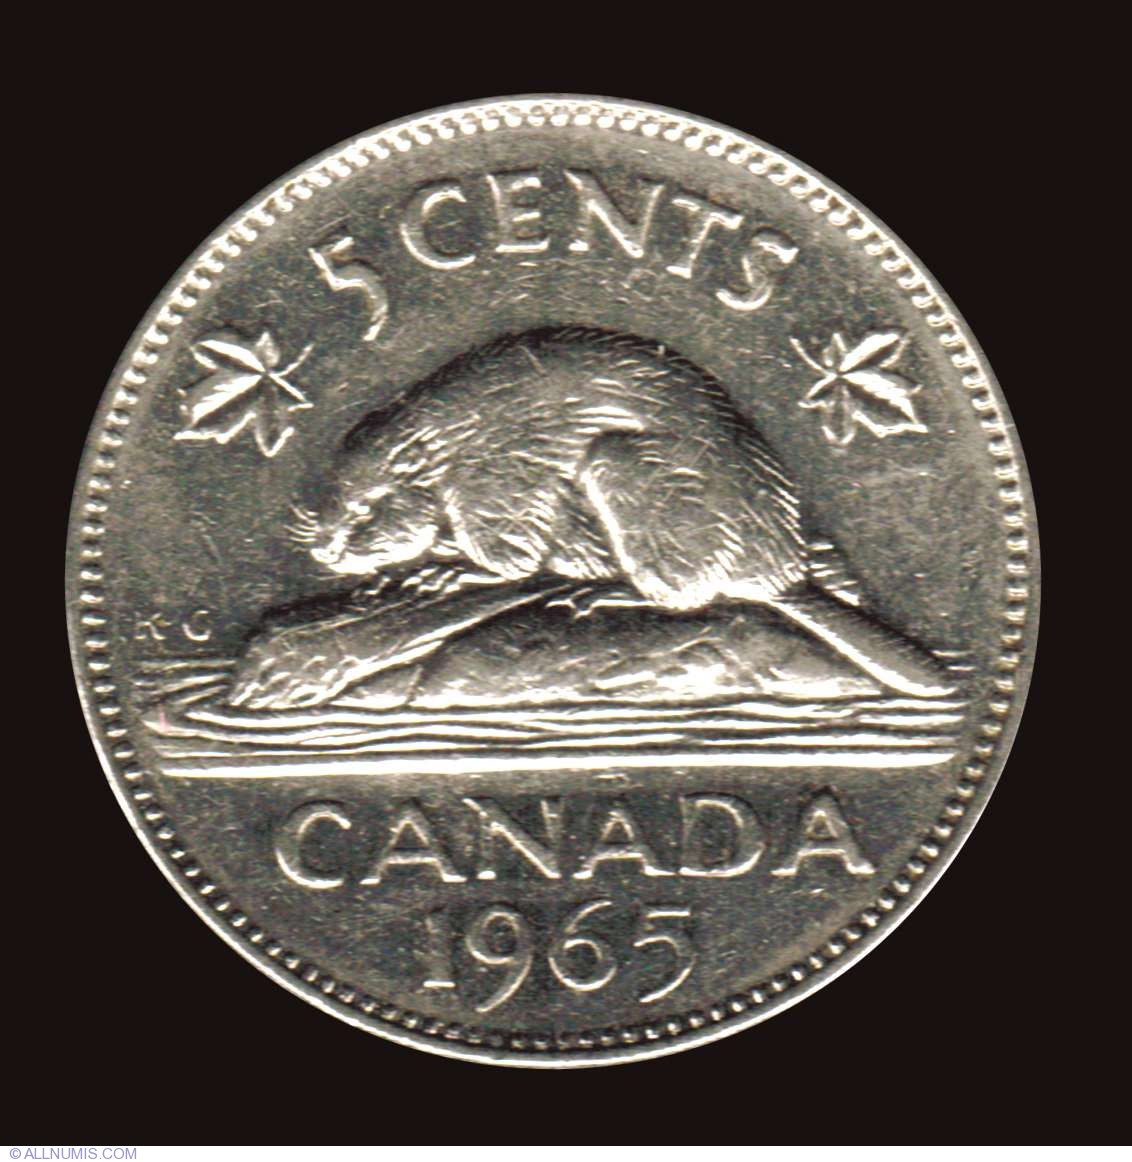 5 Cents 1965, Elizabeth II (1953-2022) - Canada - Coin - 7212